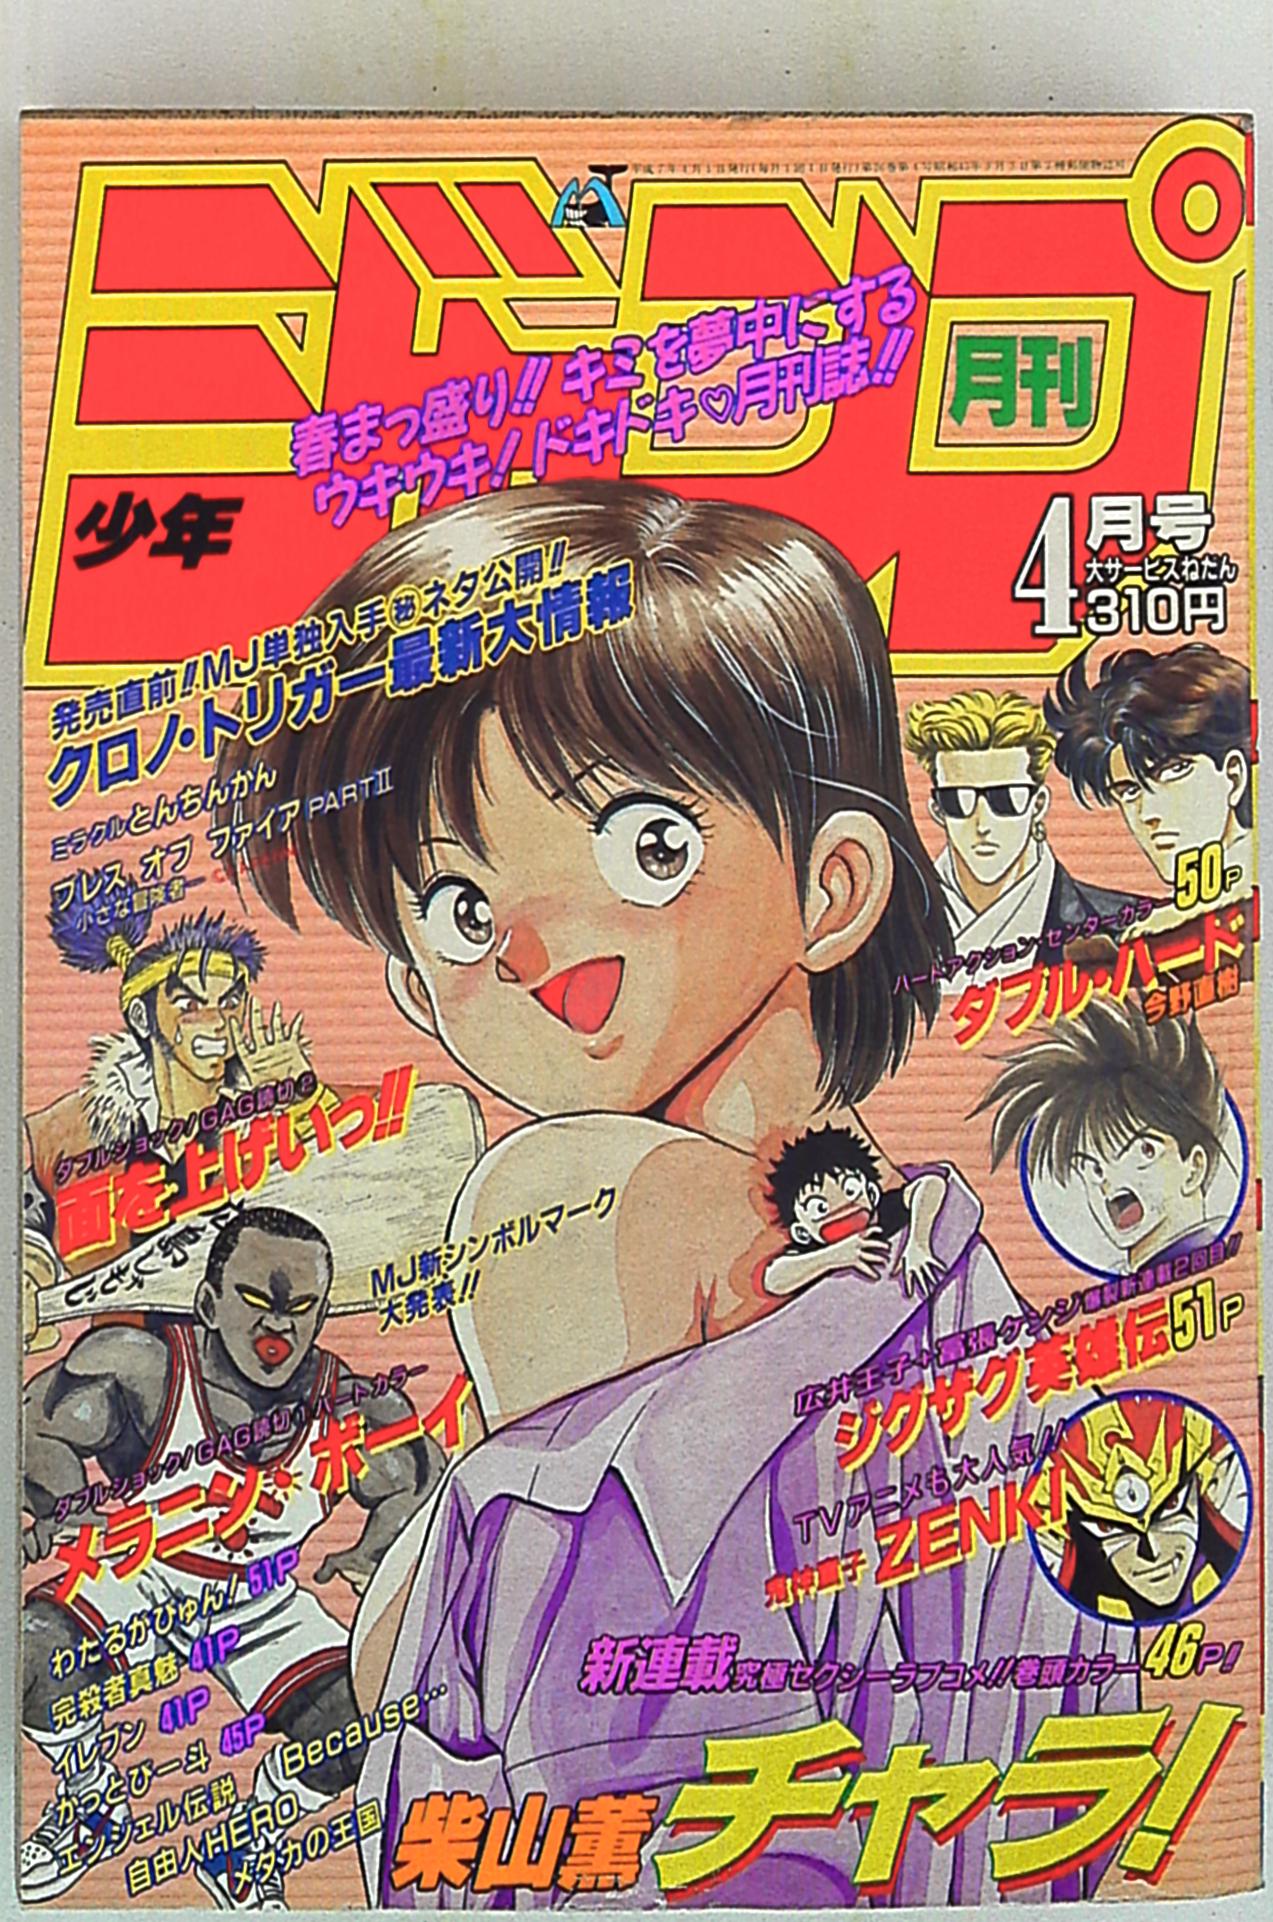 Monthly Shonen Jump Issue In April 1995 Mandarake Online Shop